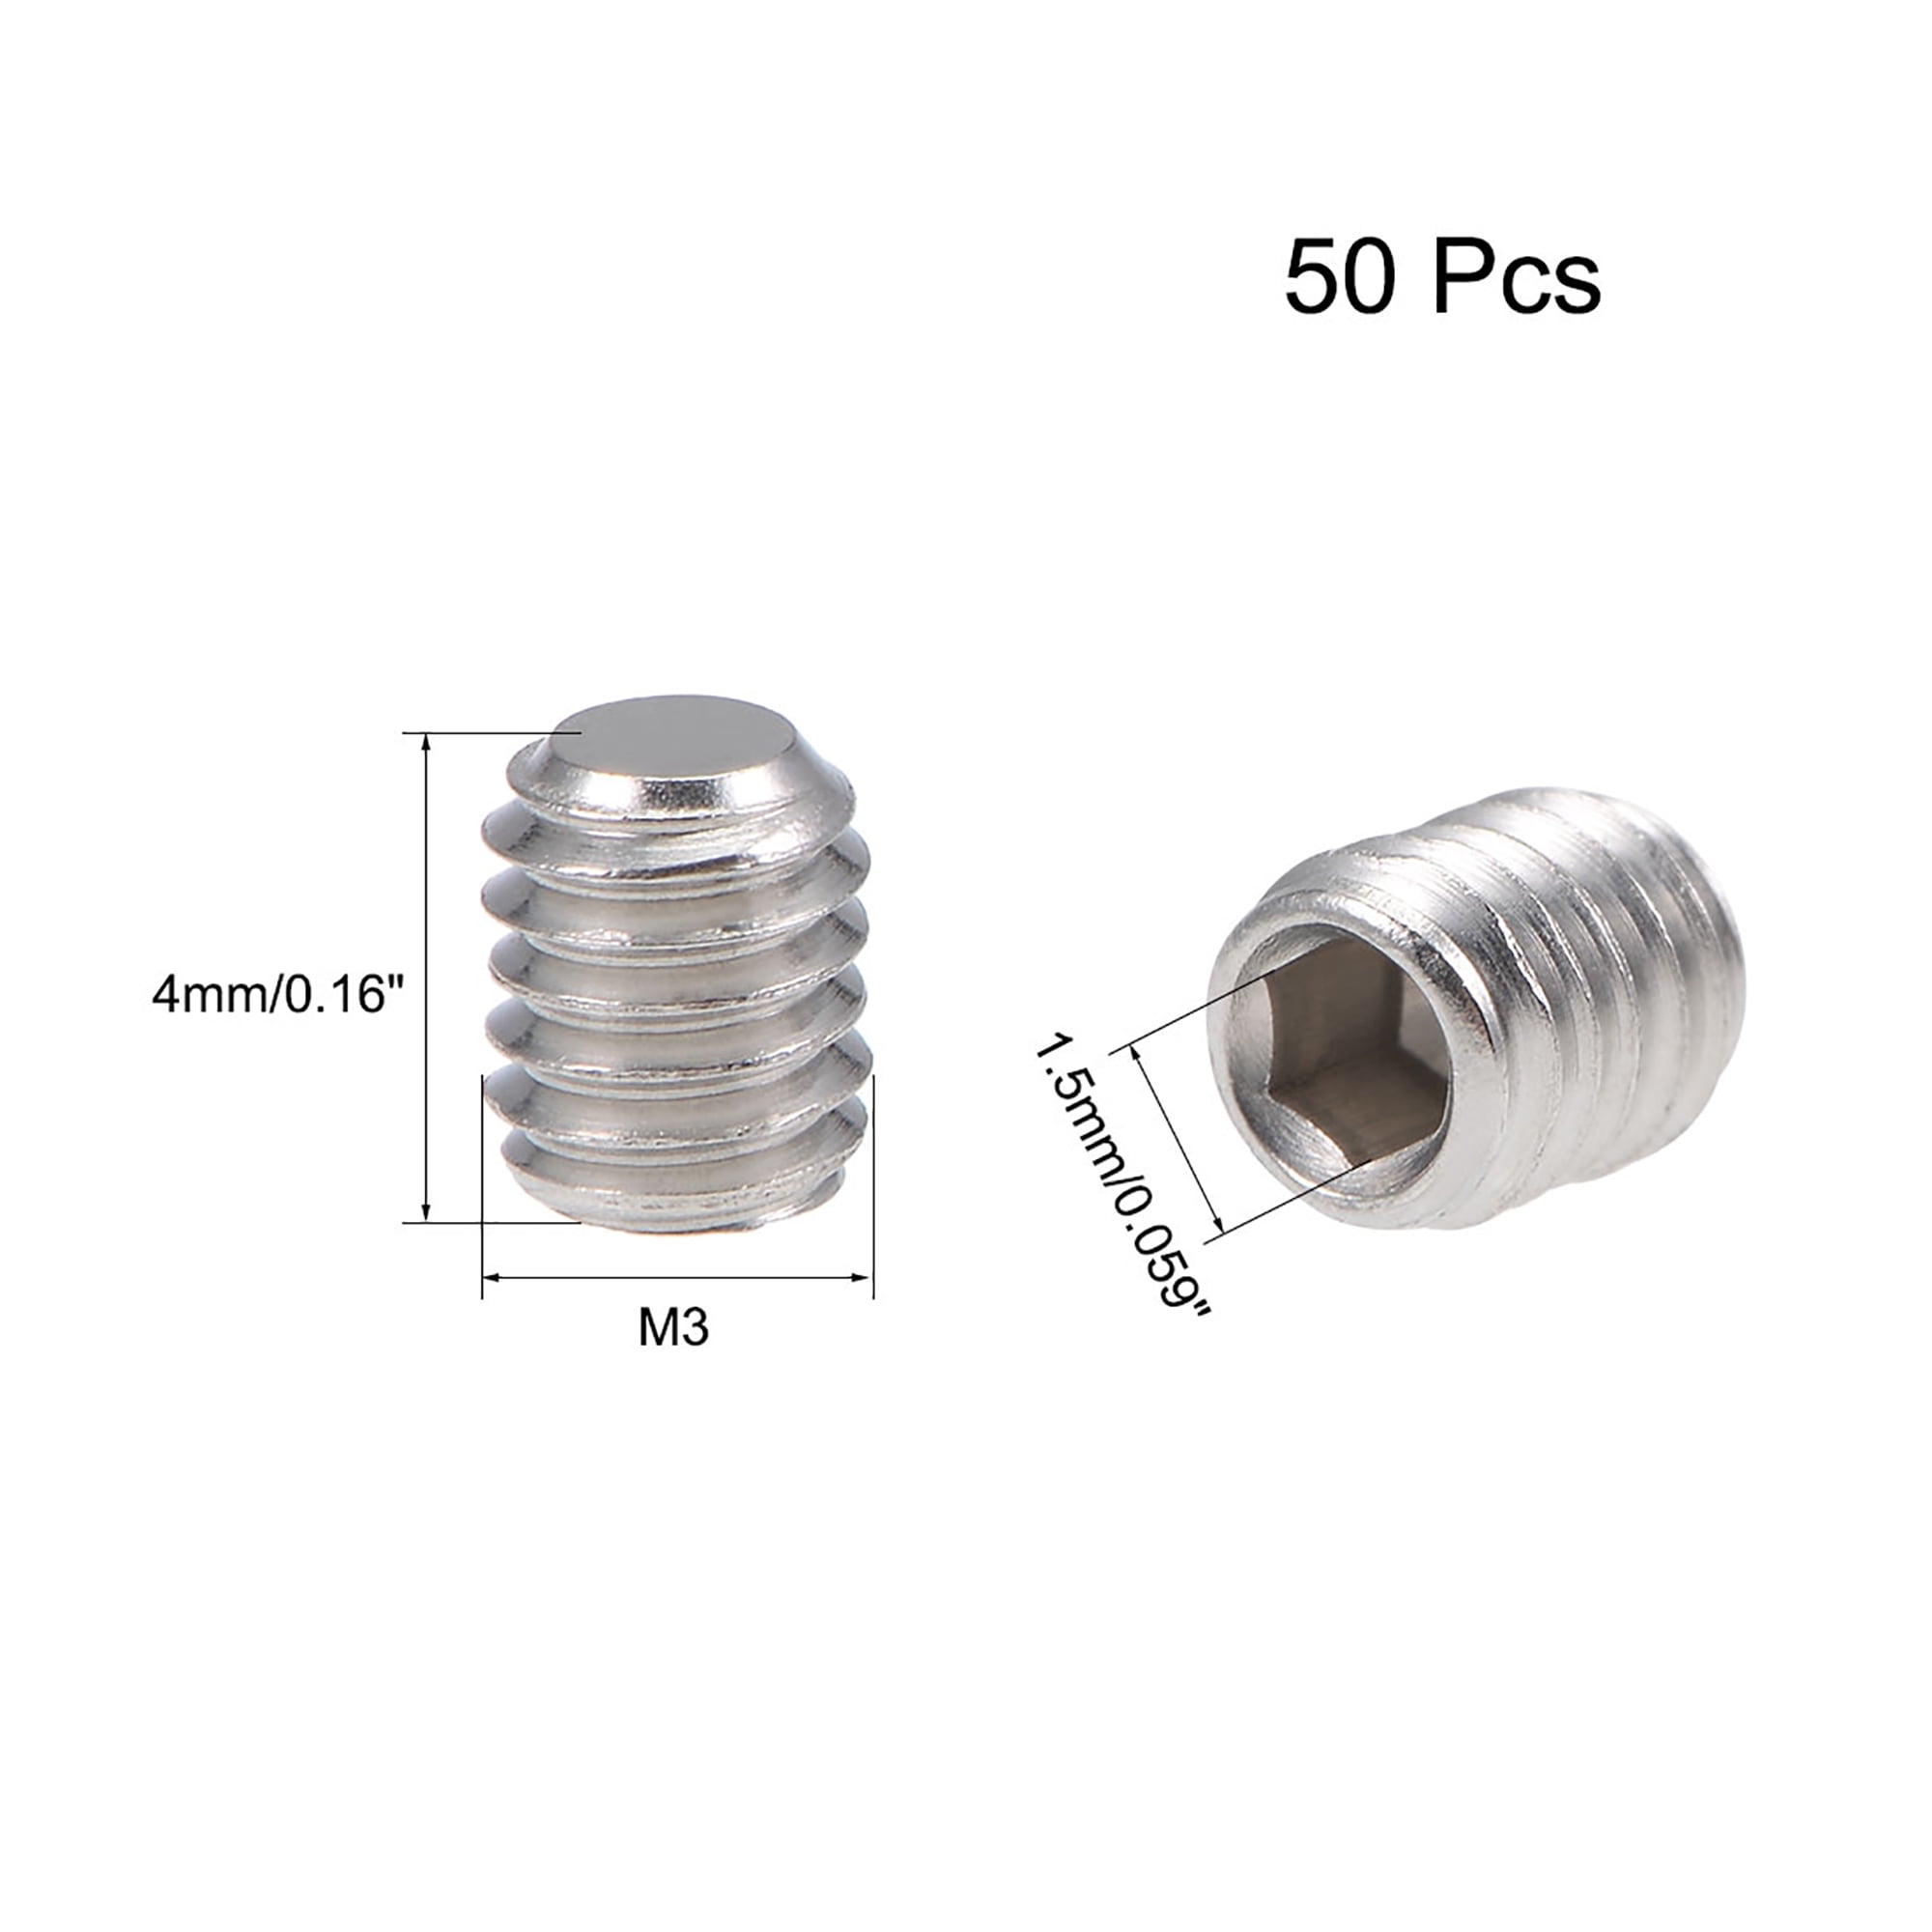 50 Pcs M3x4mm Metric 304 Stainless Steel Hex Socket Set Flat Point Grub Screws Silver Tone for Towel Rack Door Knob （M3x4mm）